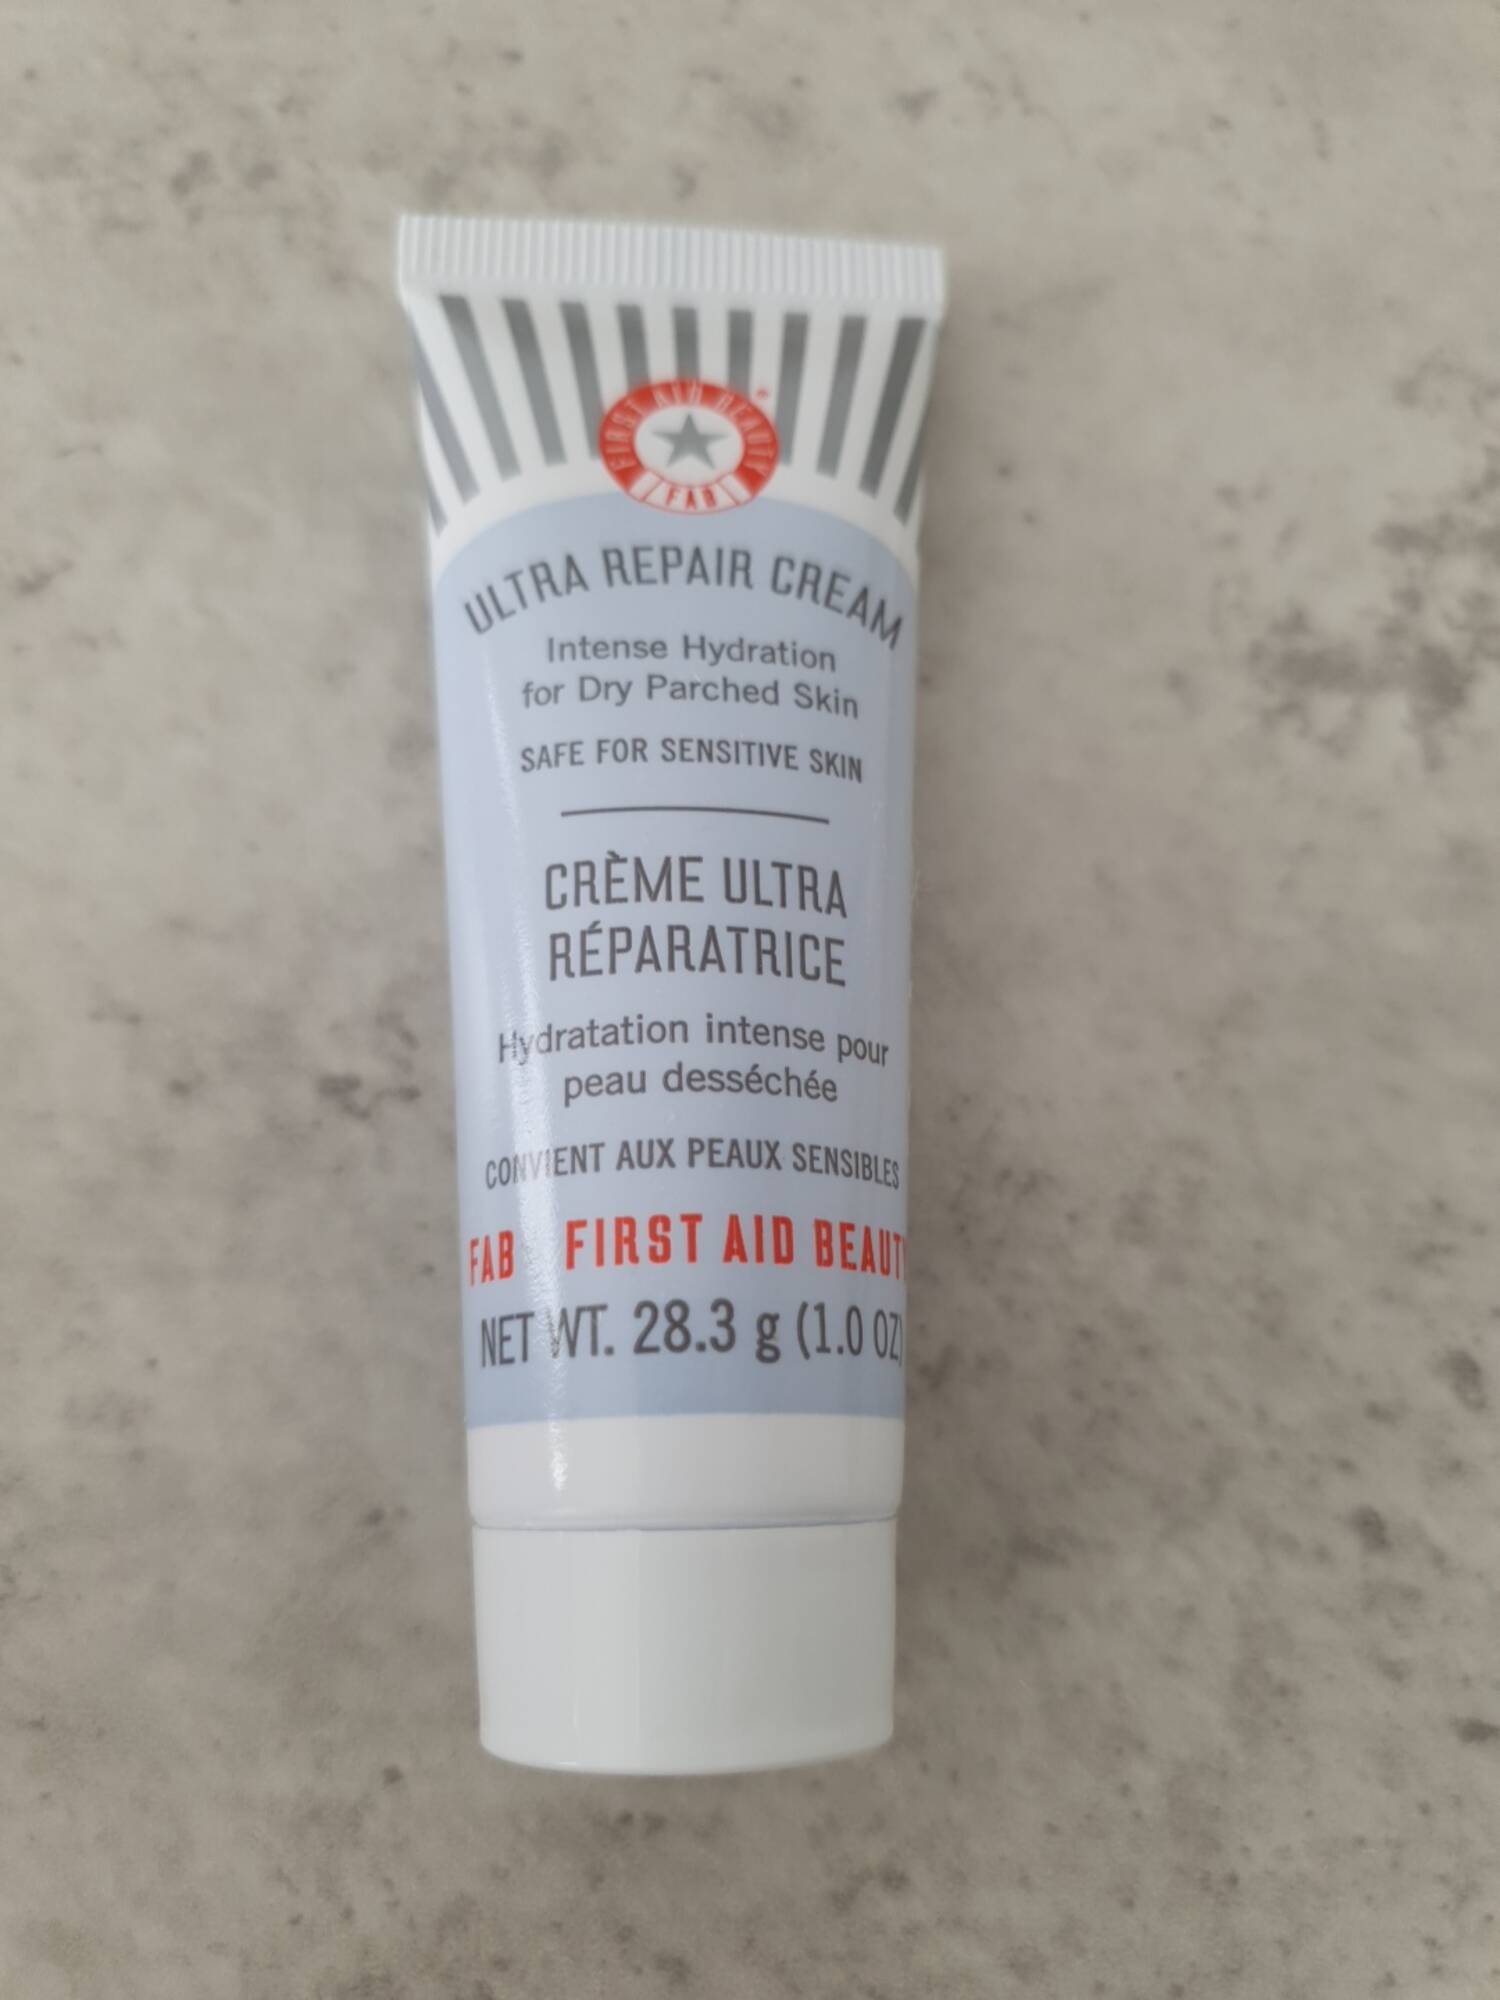 FIRST AID BEAUTY - Crème ultra réparatrice